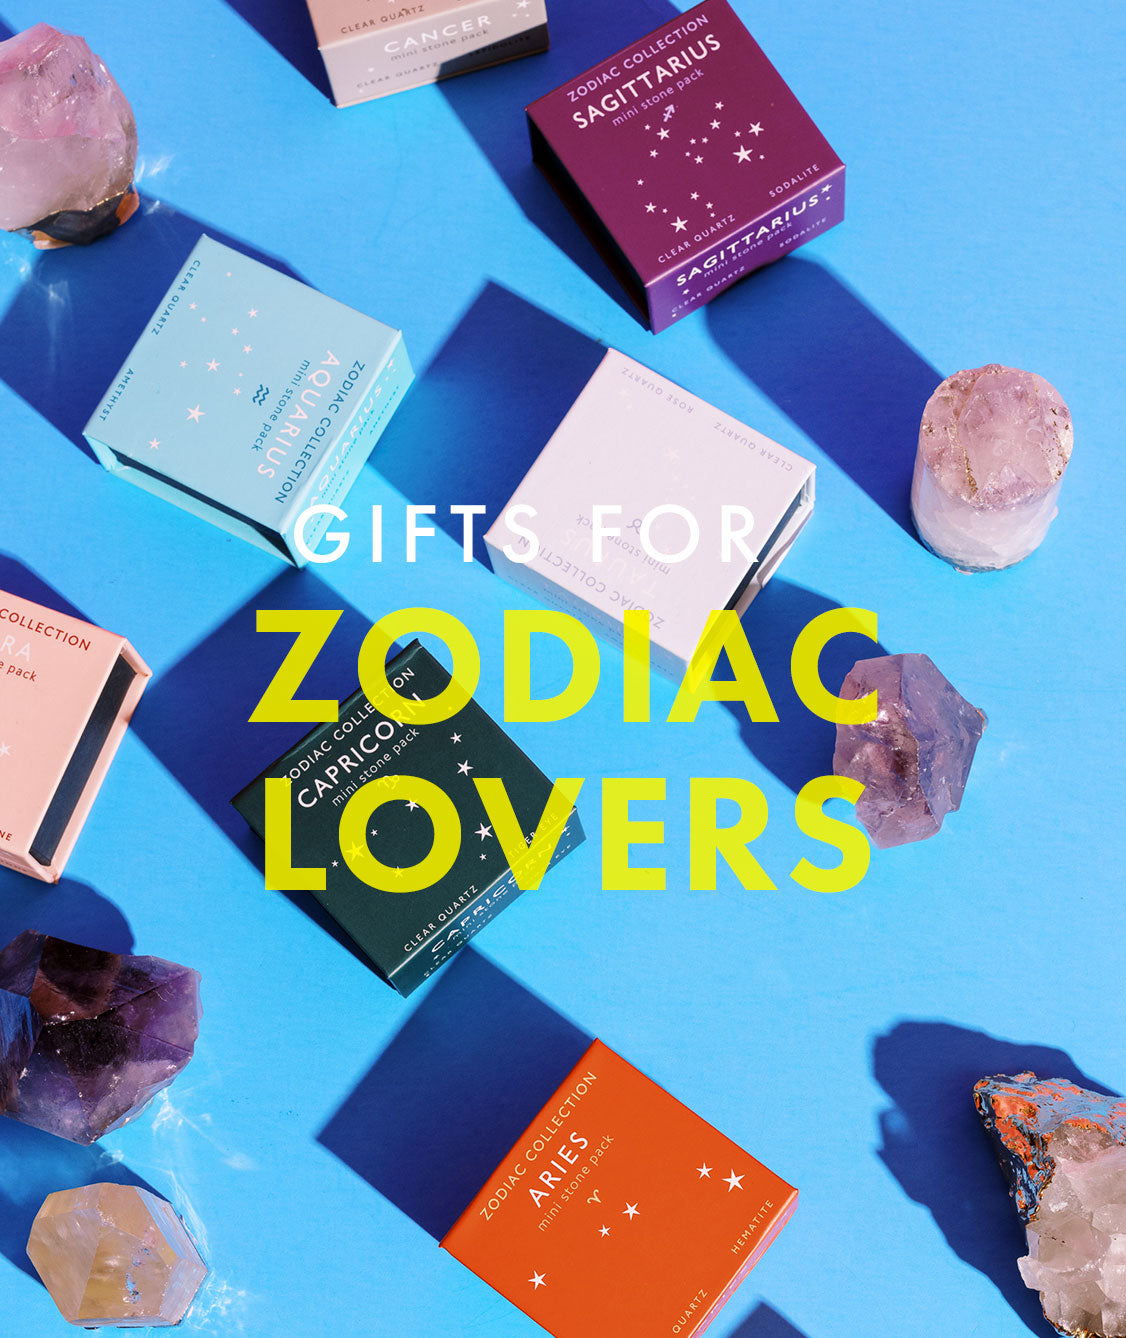 Zodiac Lovers Gift Guide Got Beauty pic